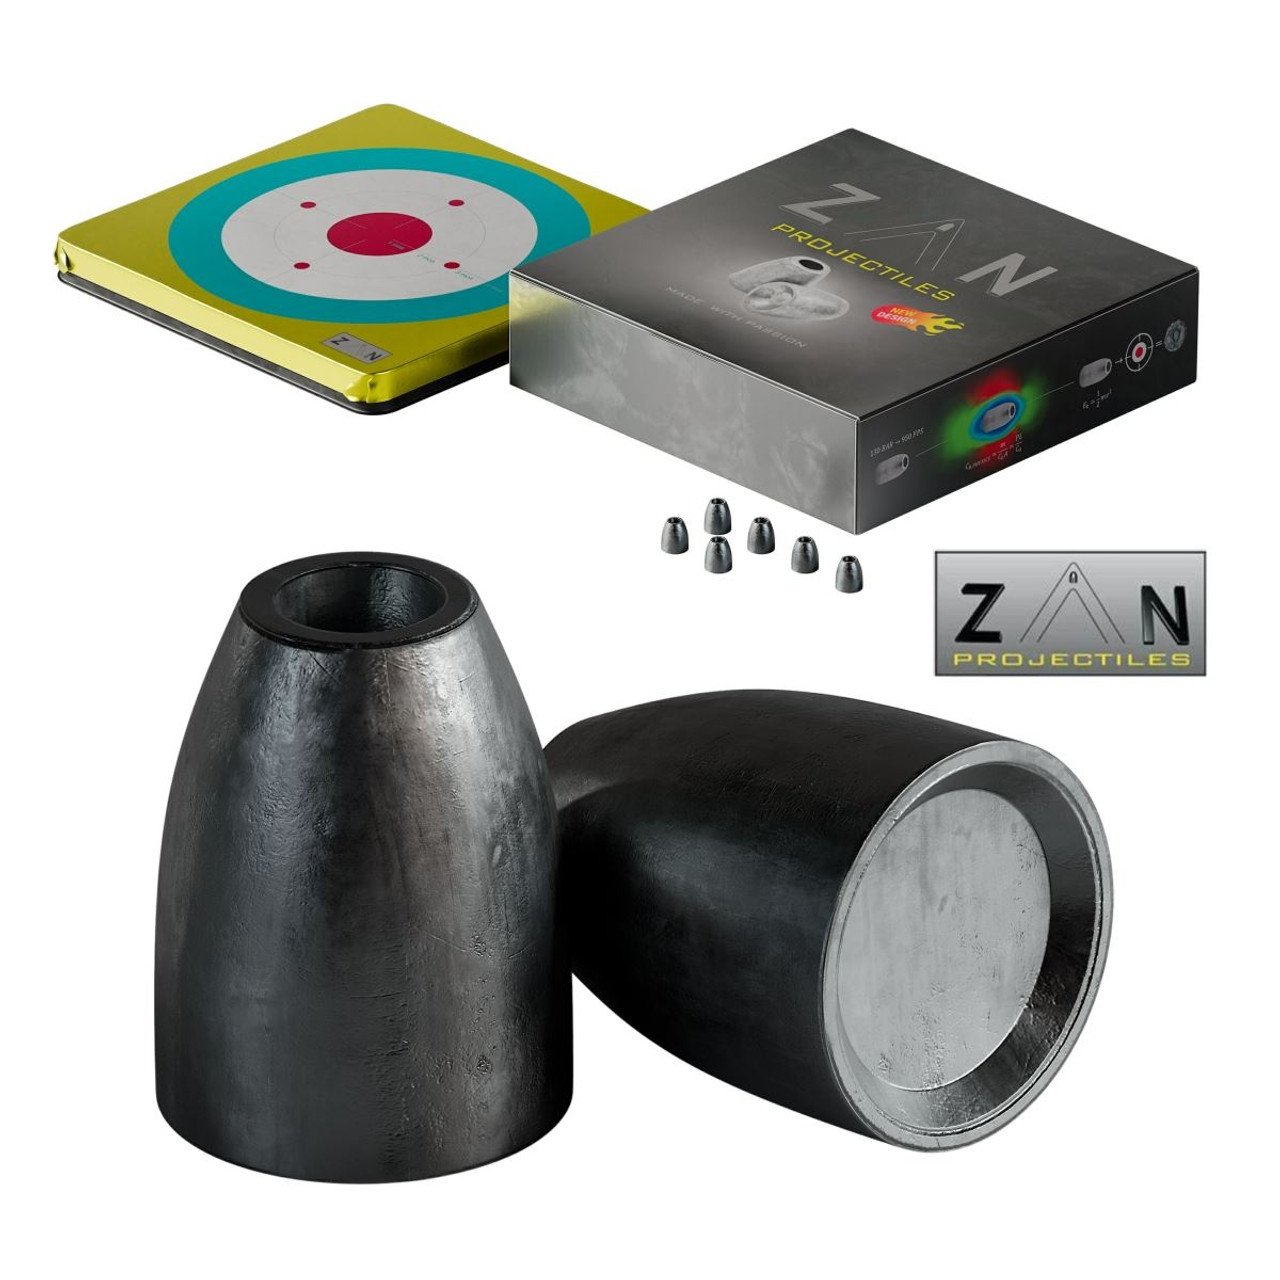 ZAN Projectiles Slugs .22 28gr .218 HP Hollow Point Pellets for Air Rifles